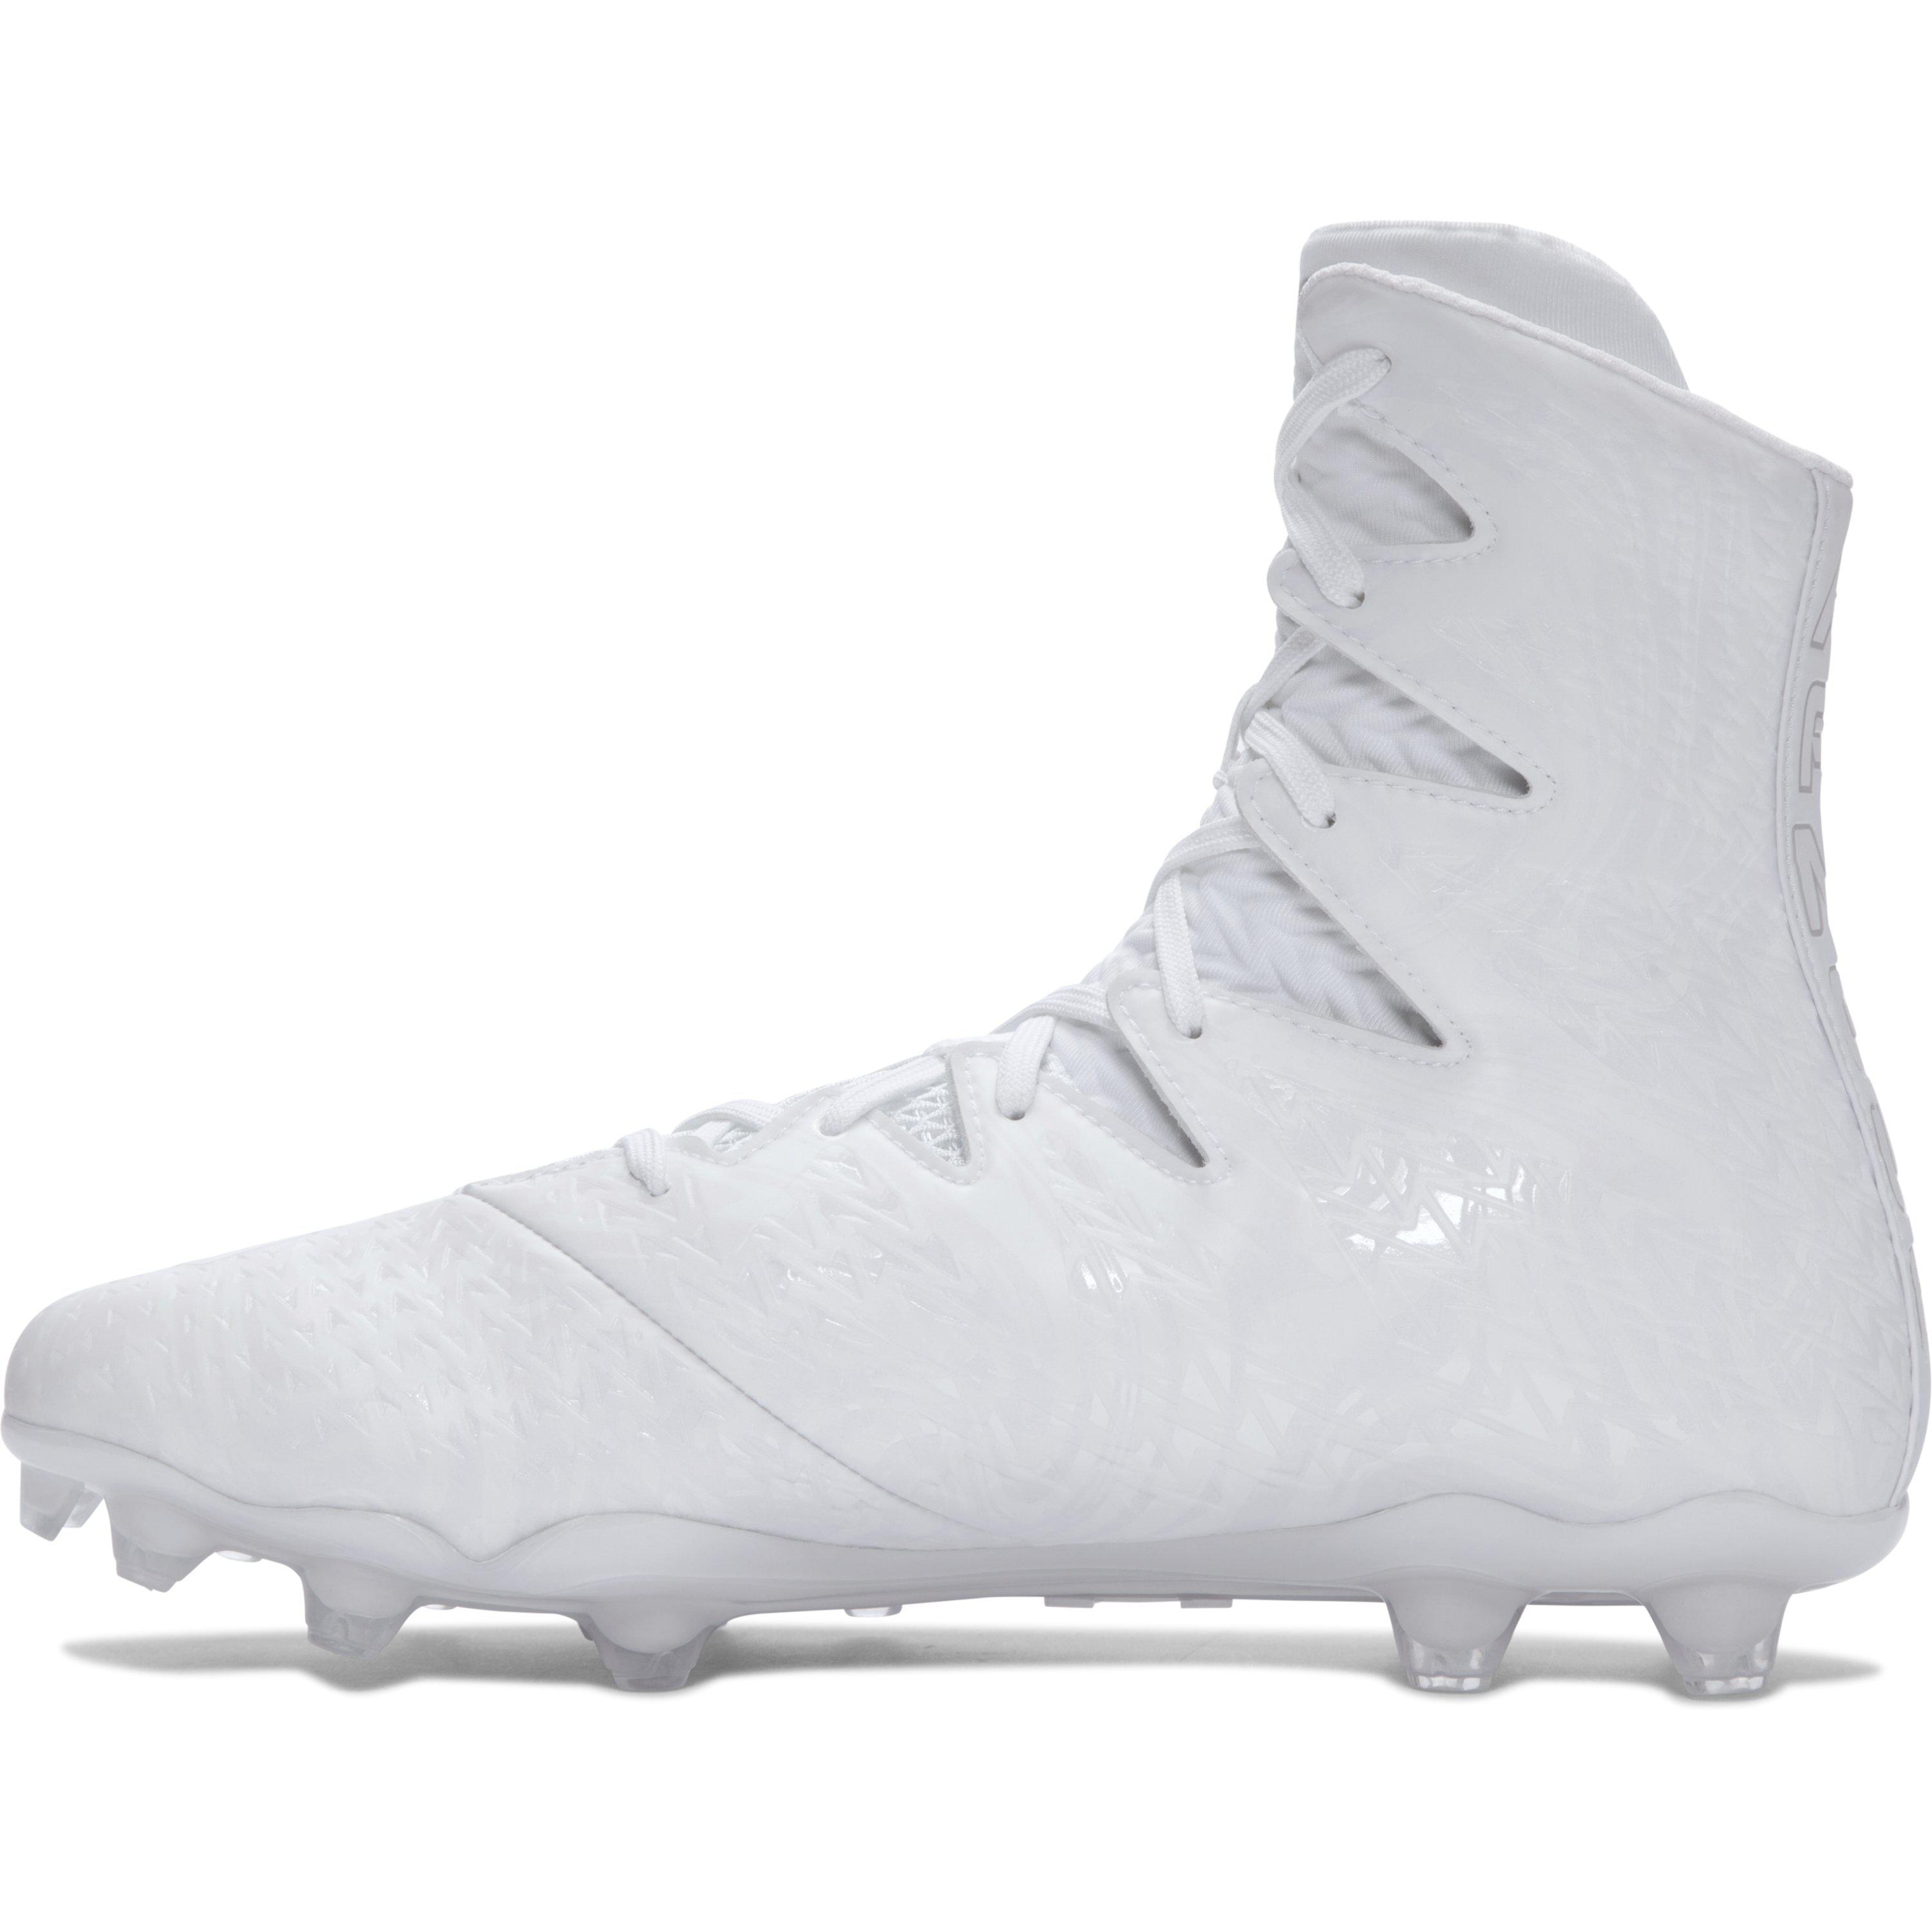 11 Under Armour Men's Highlight MC Football Shoe /White 100 White 